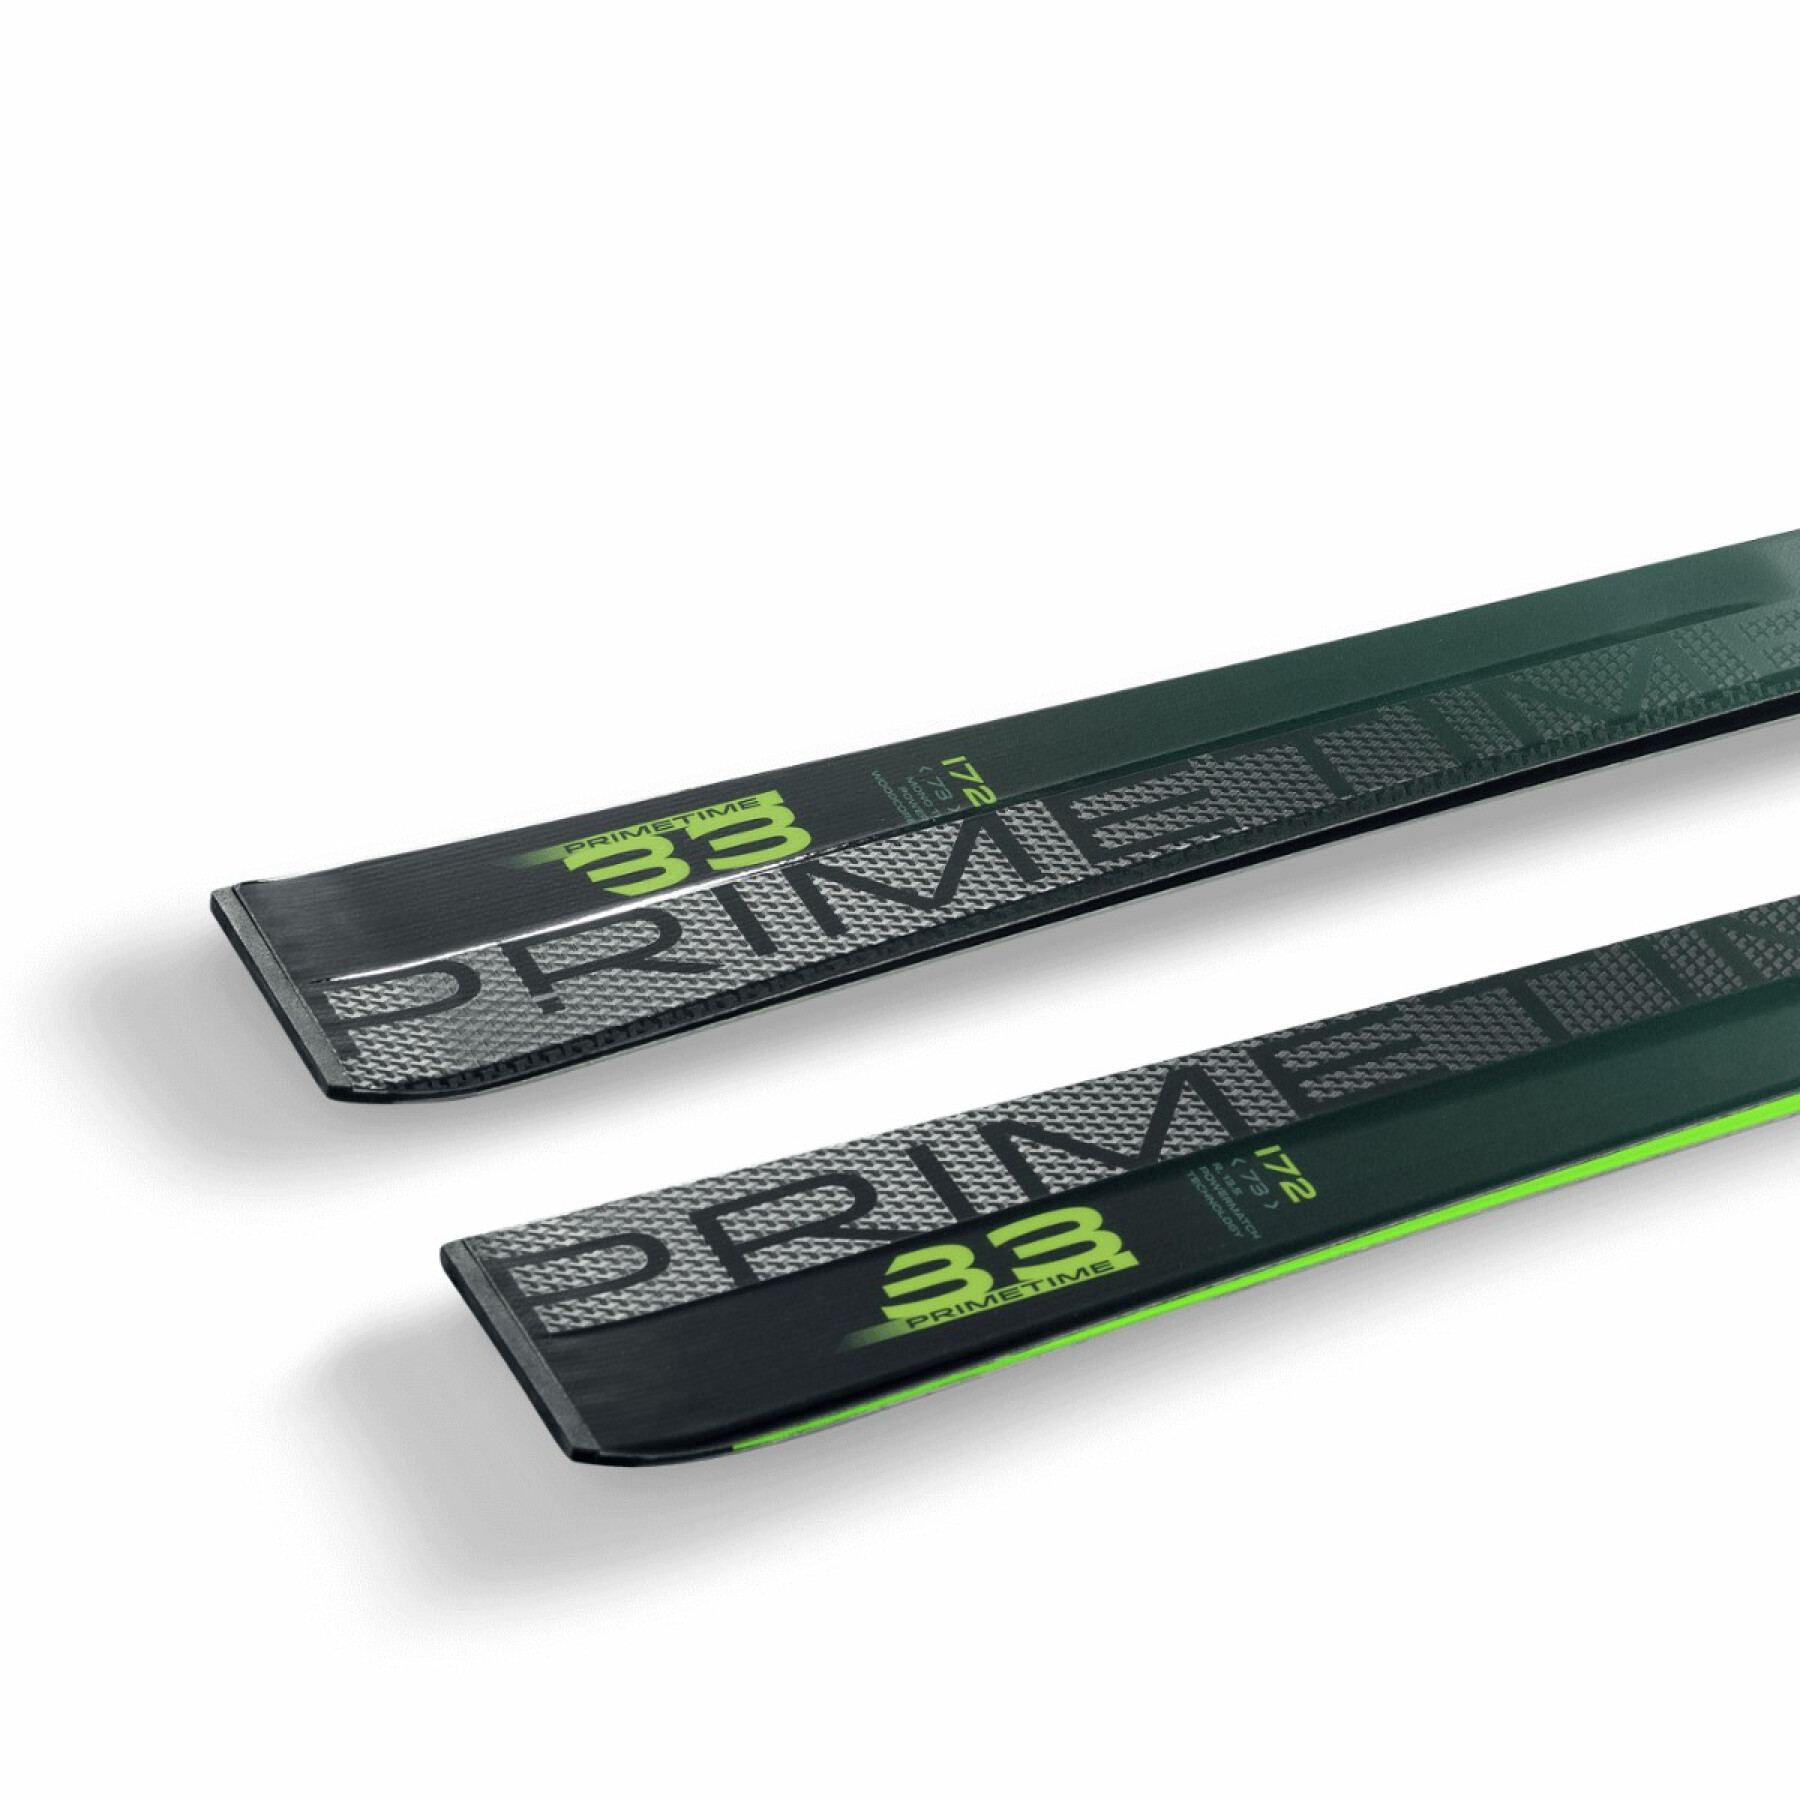 Pack skis Primetime 33 FX EM 11.0 avec fixations Elan